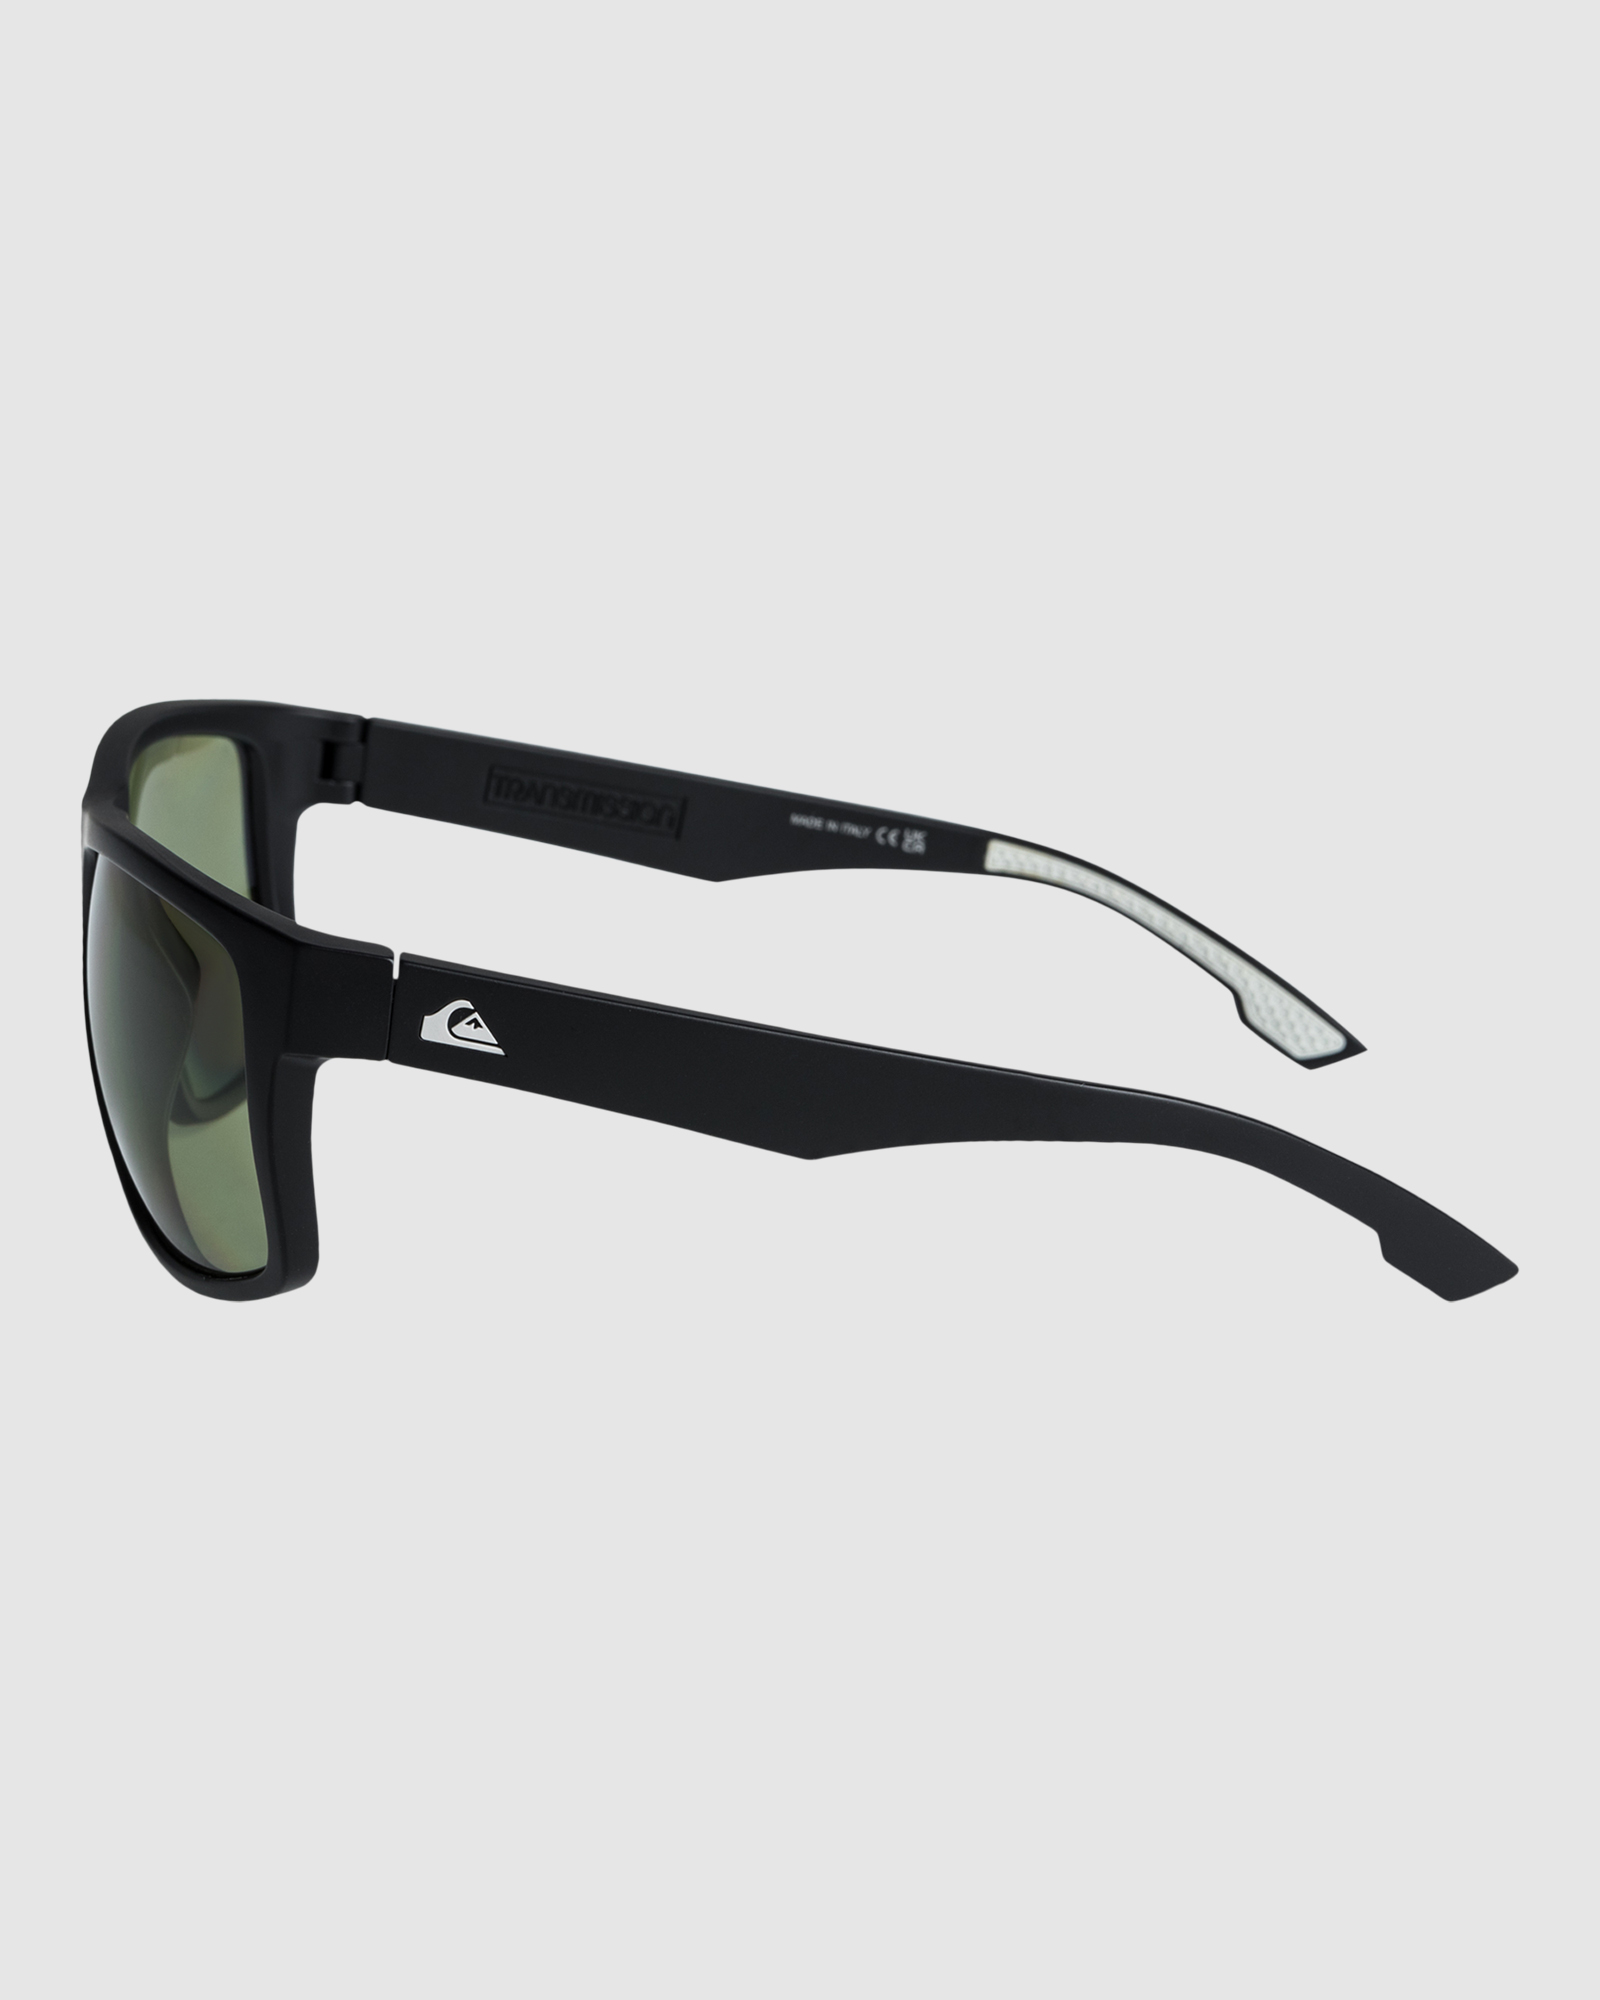 Quiksilver Transmission P - Polarised Sunglasses For Men - Black Green Plz  | SurfStitch